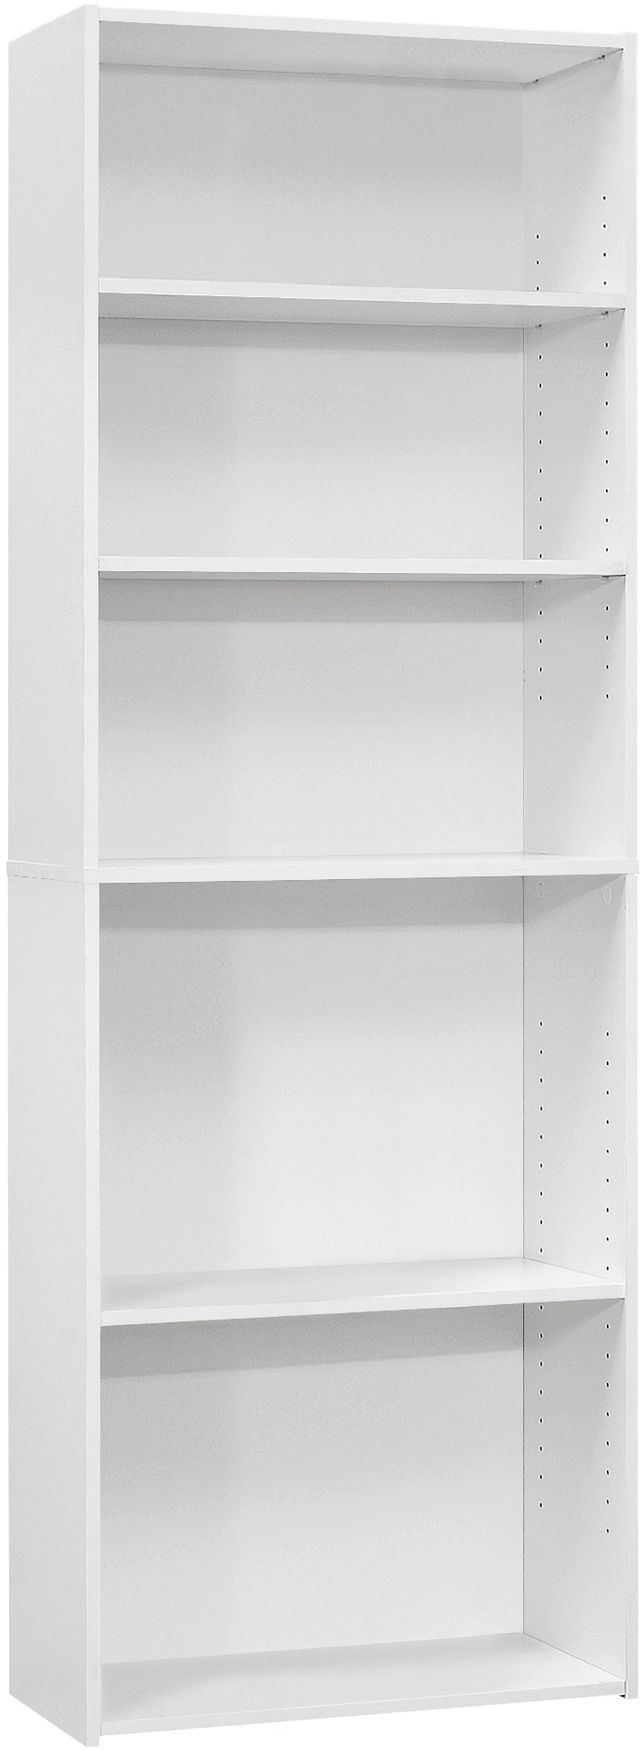 Monarch Specialties Inc. 72"H White 5 Shelves Bookcase 0